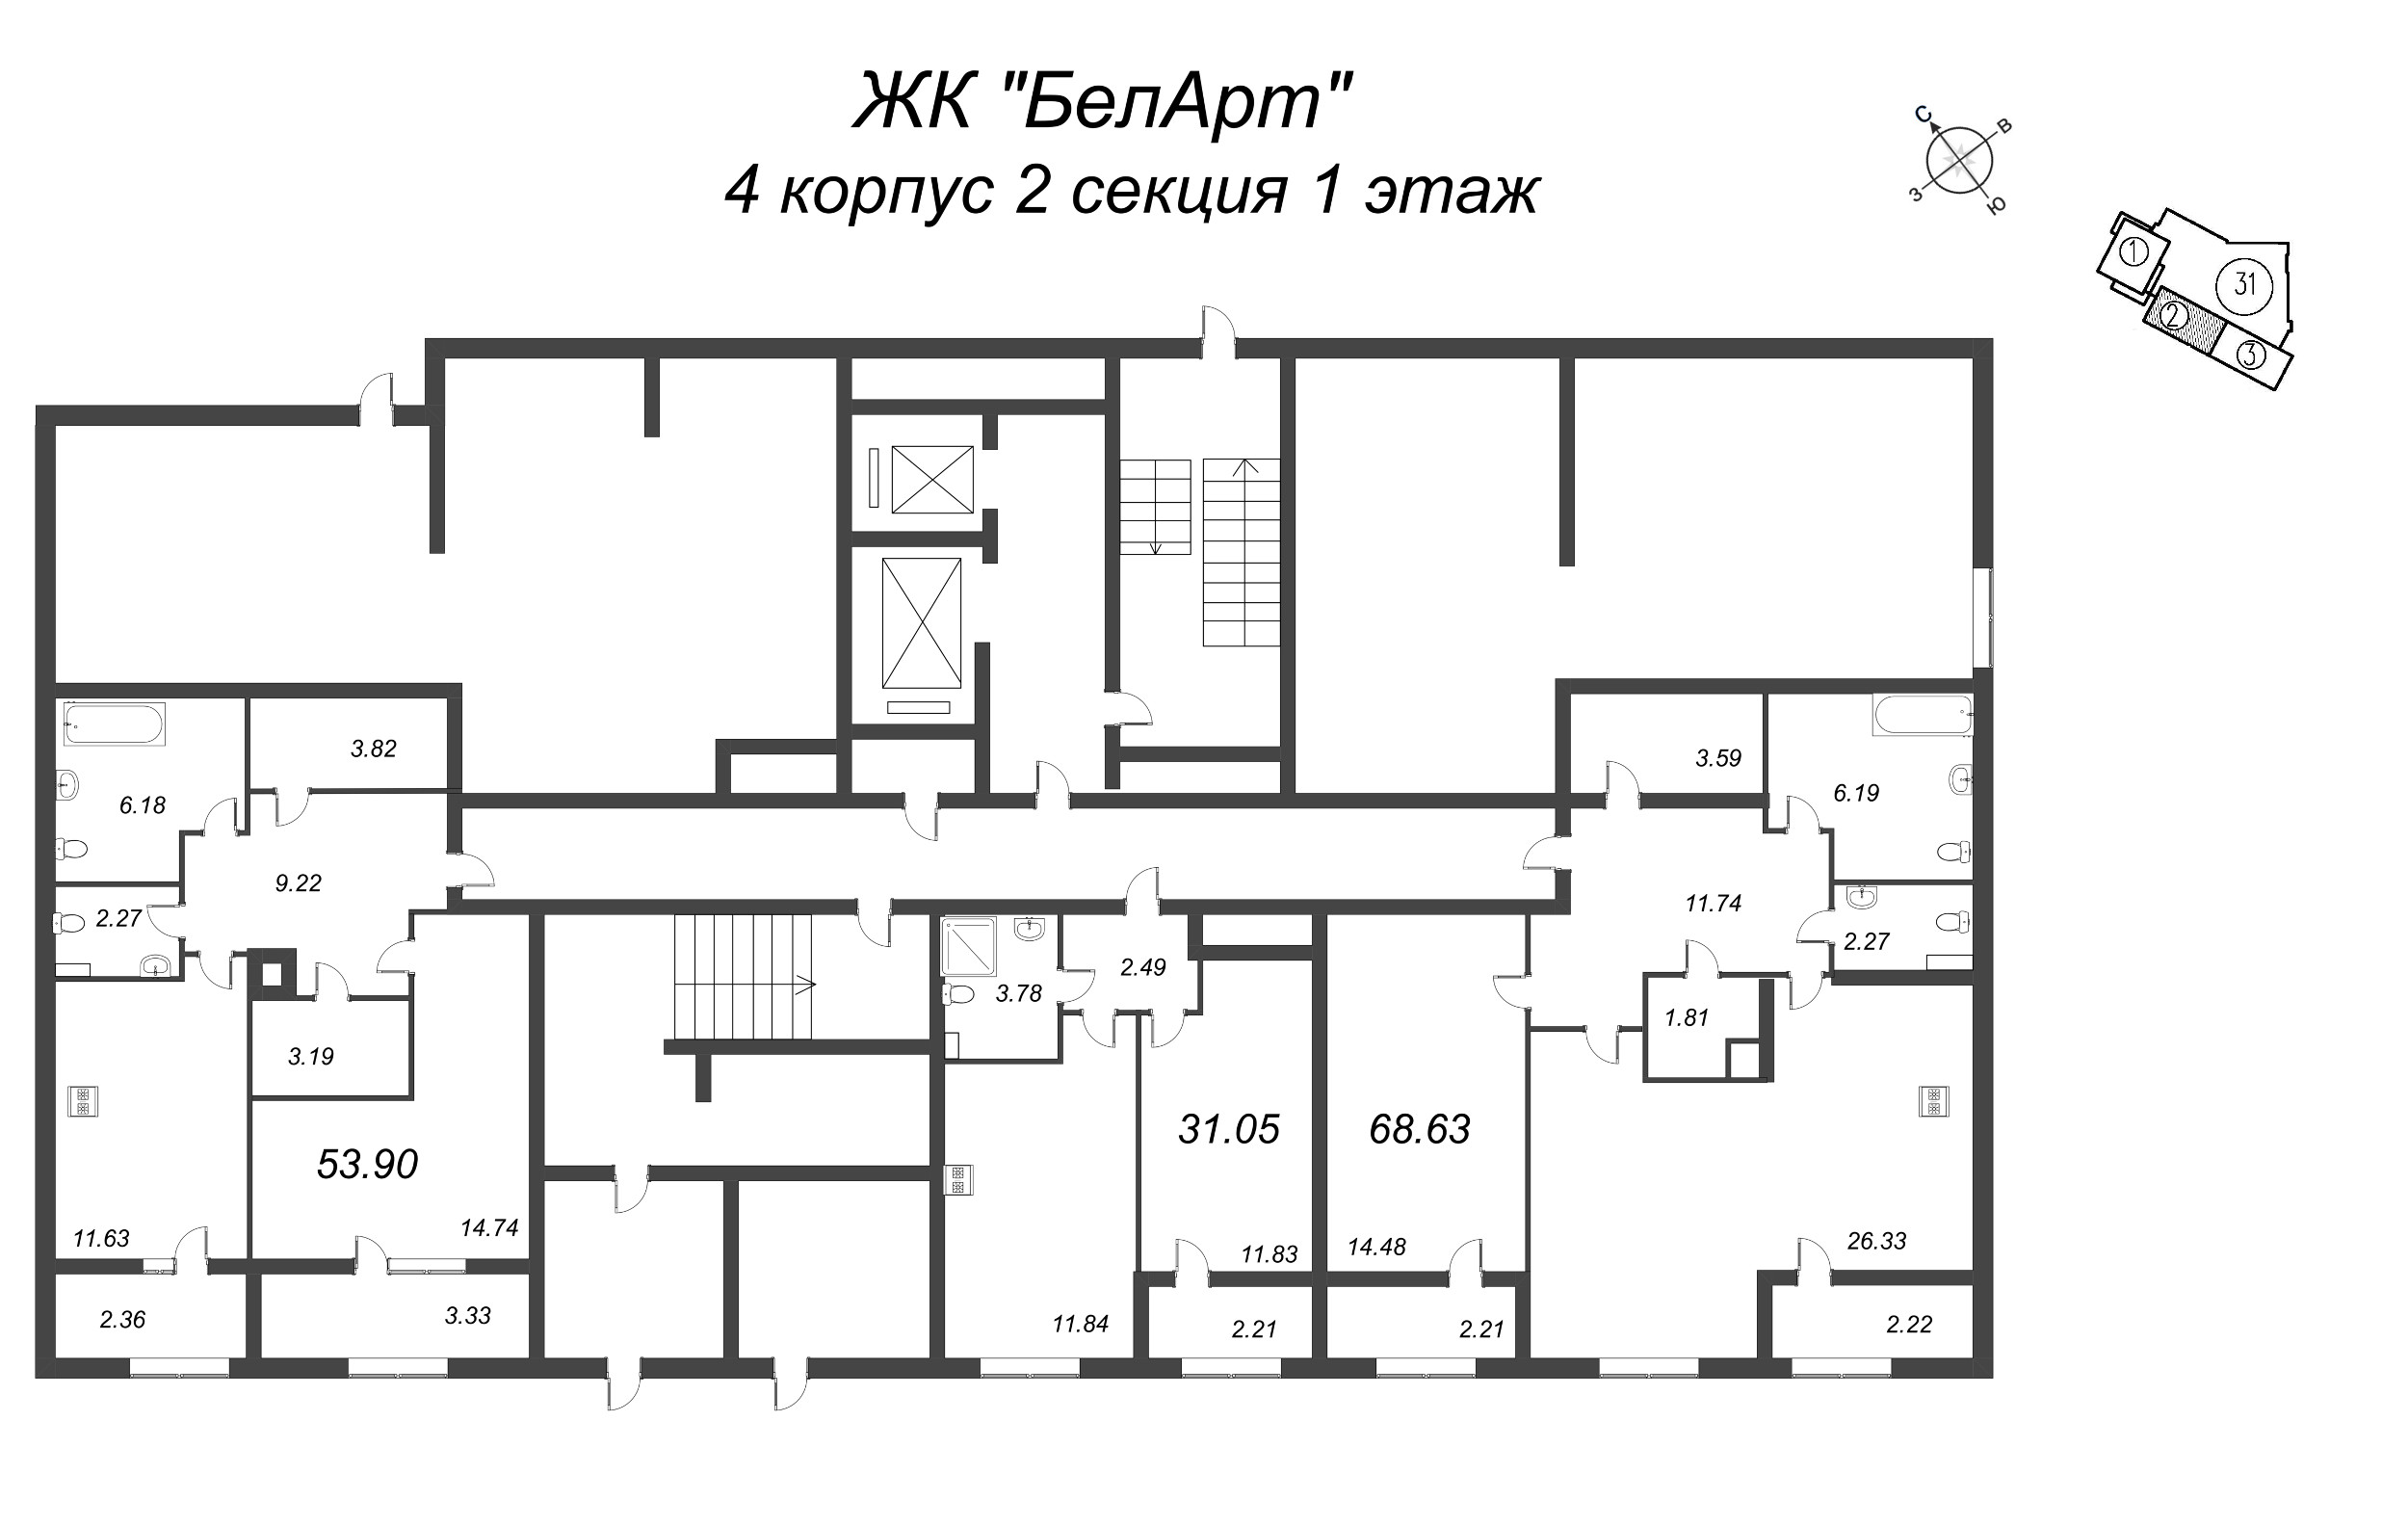 2-комнатная (Евро) квартира, 68.63 м² - планировка этажа